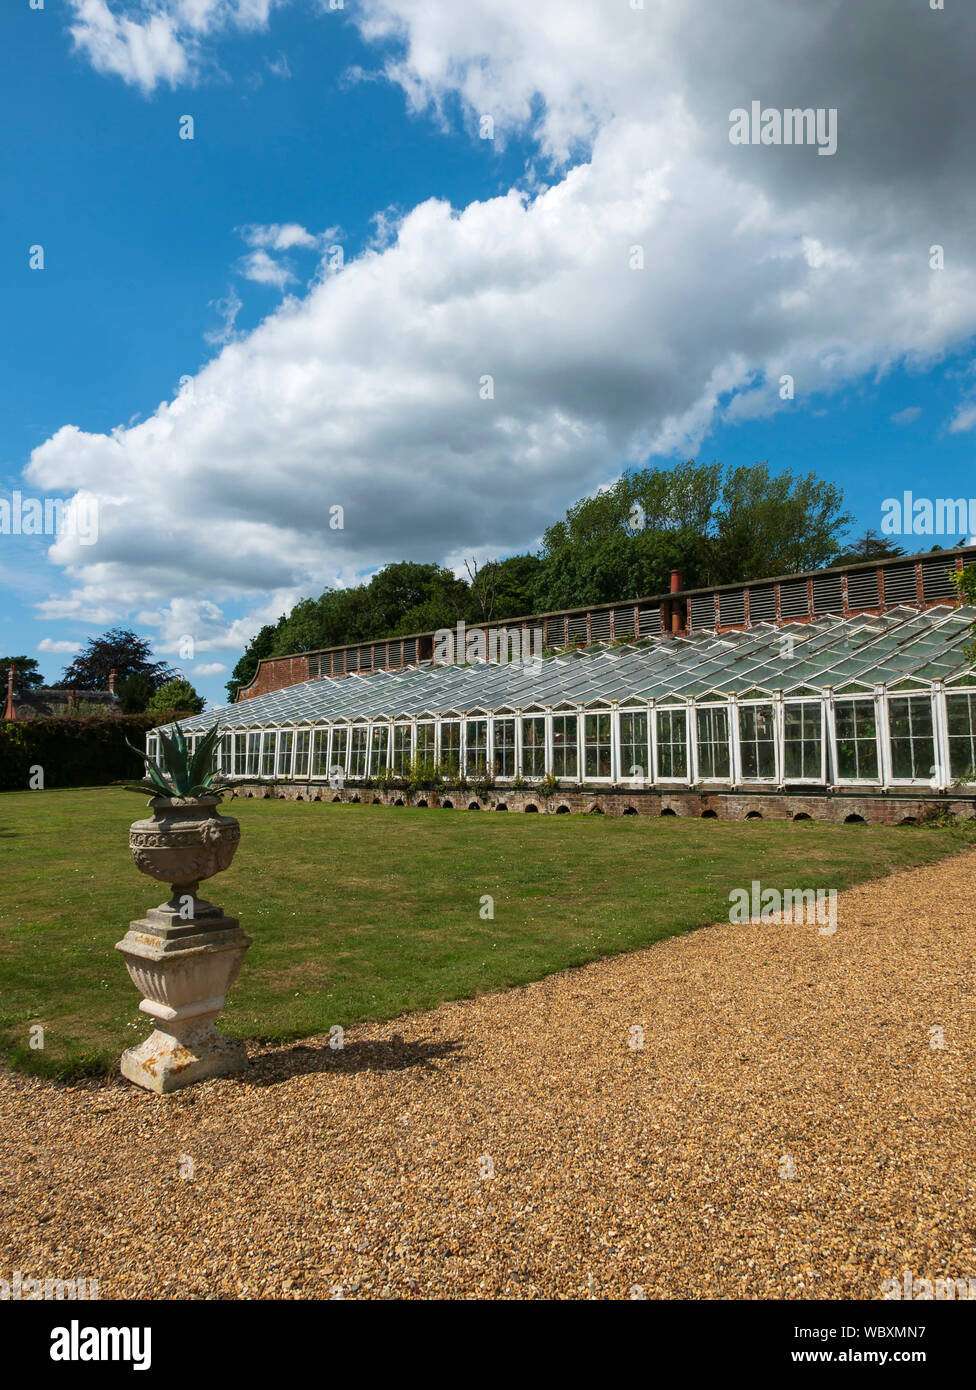 Ridge et le sillon des maisons de verre, Somerleyton Hall, Somerleyton, Lowestoft, Suffolk, Angleterre, Royaume-Uni. Banque D'Images